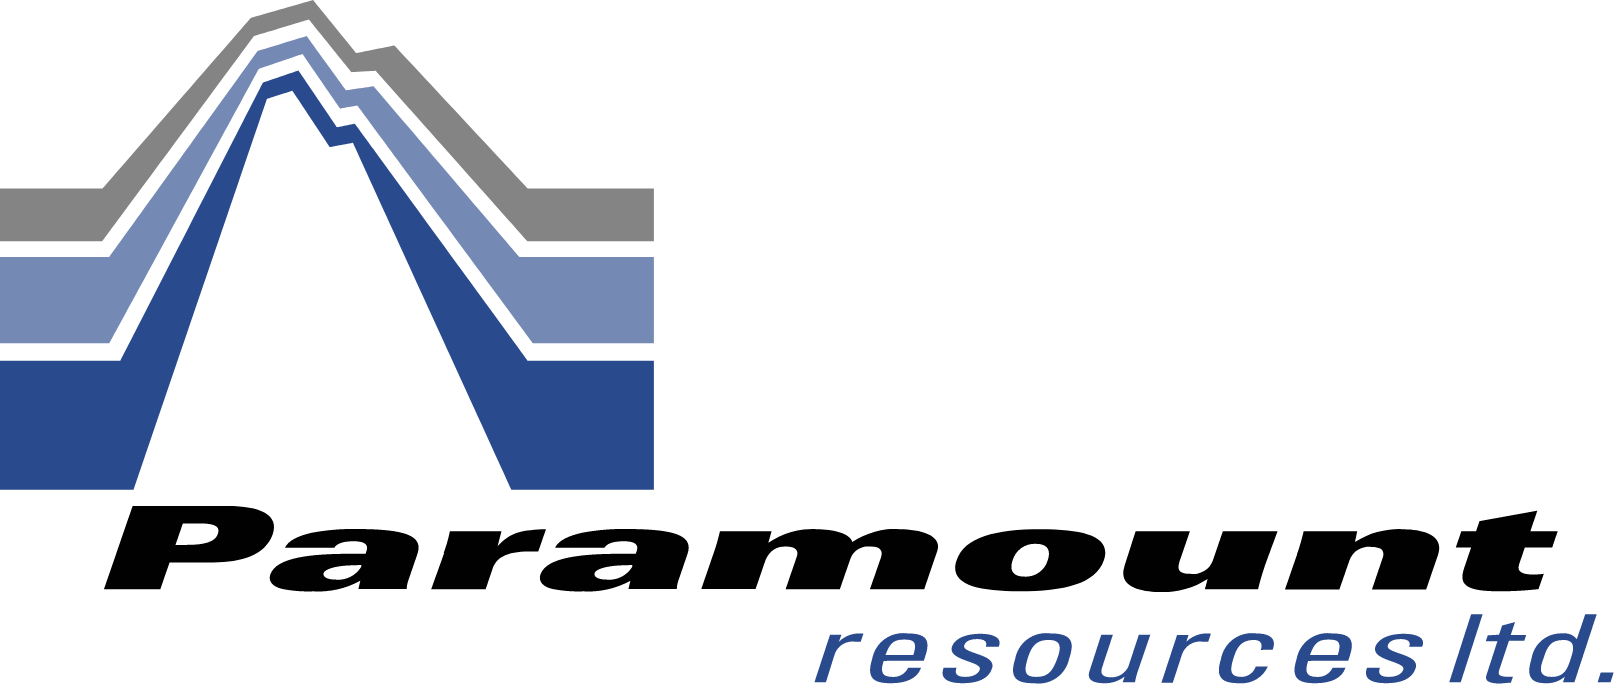 Paramount Resources logo large (transparent PNG)